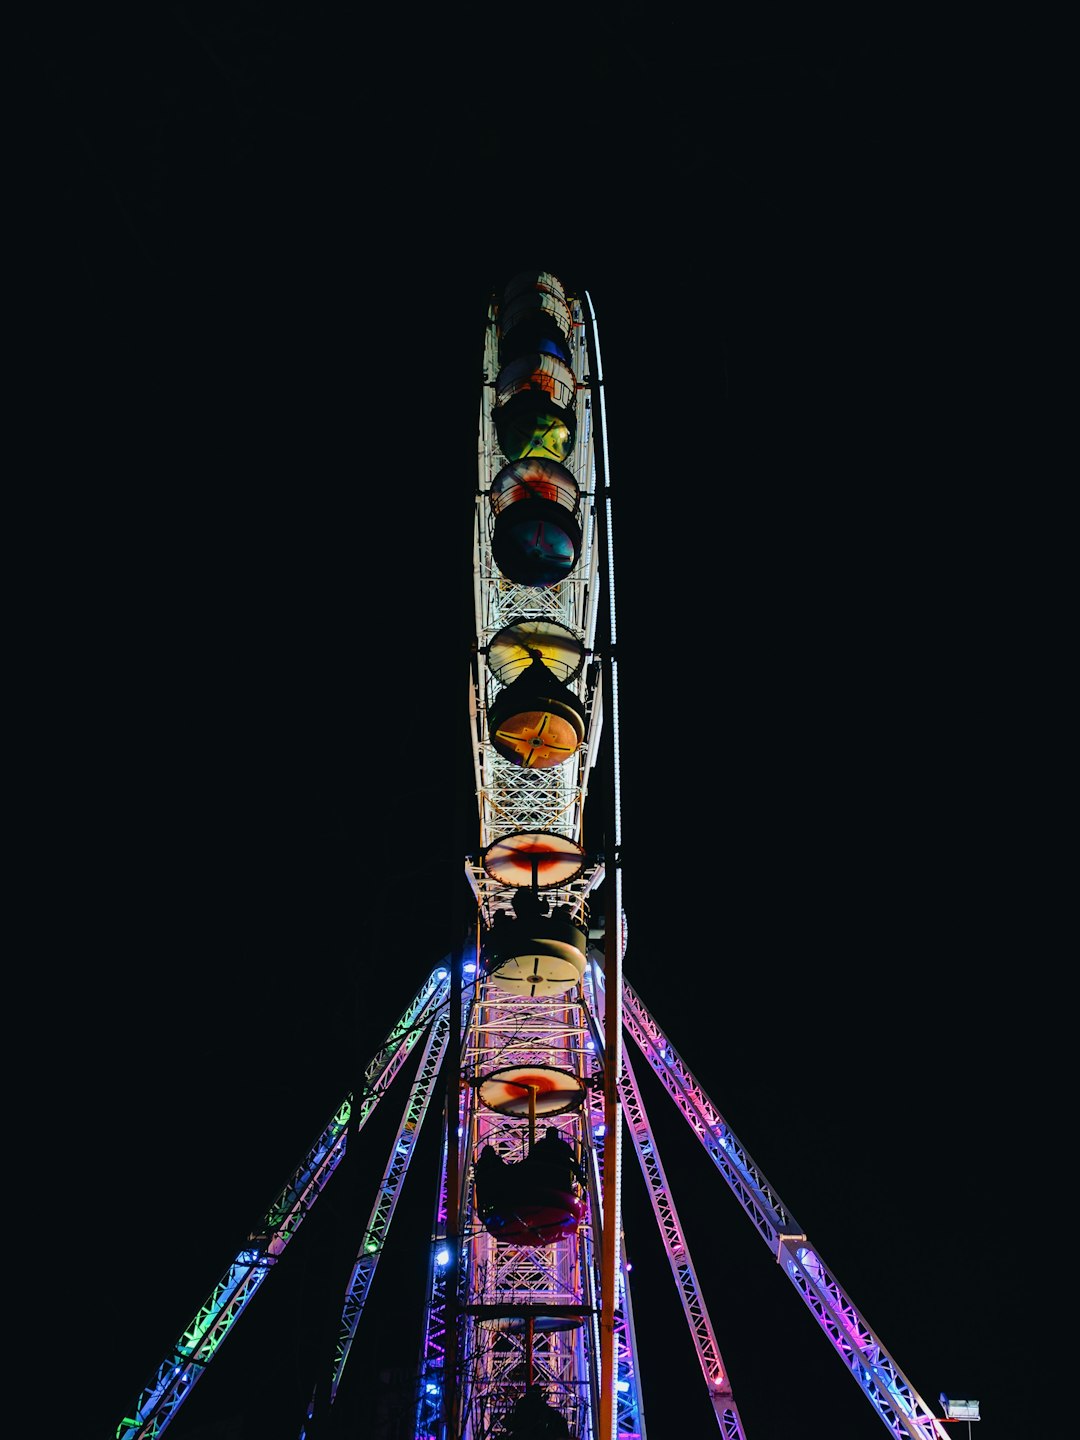 lighted Ferris wheel during nighttime